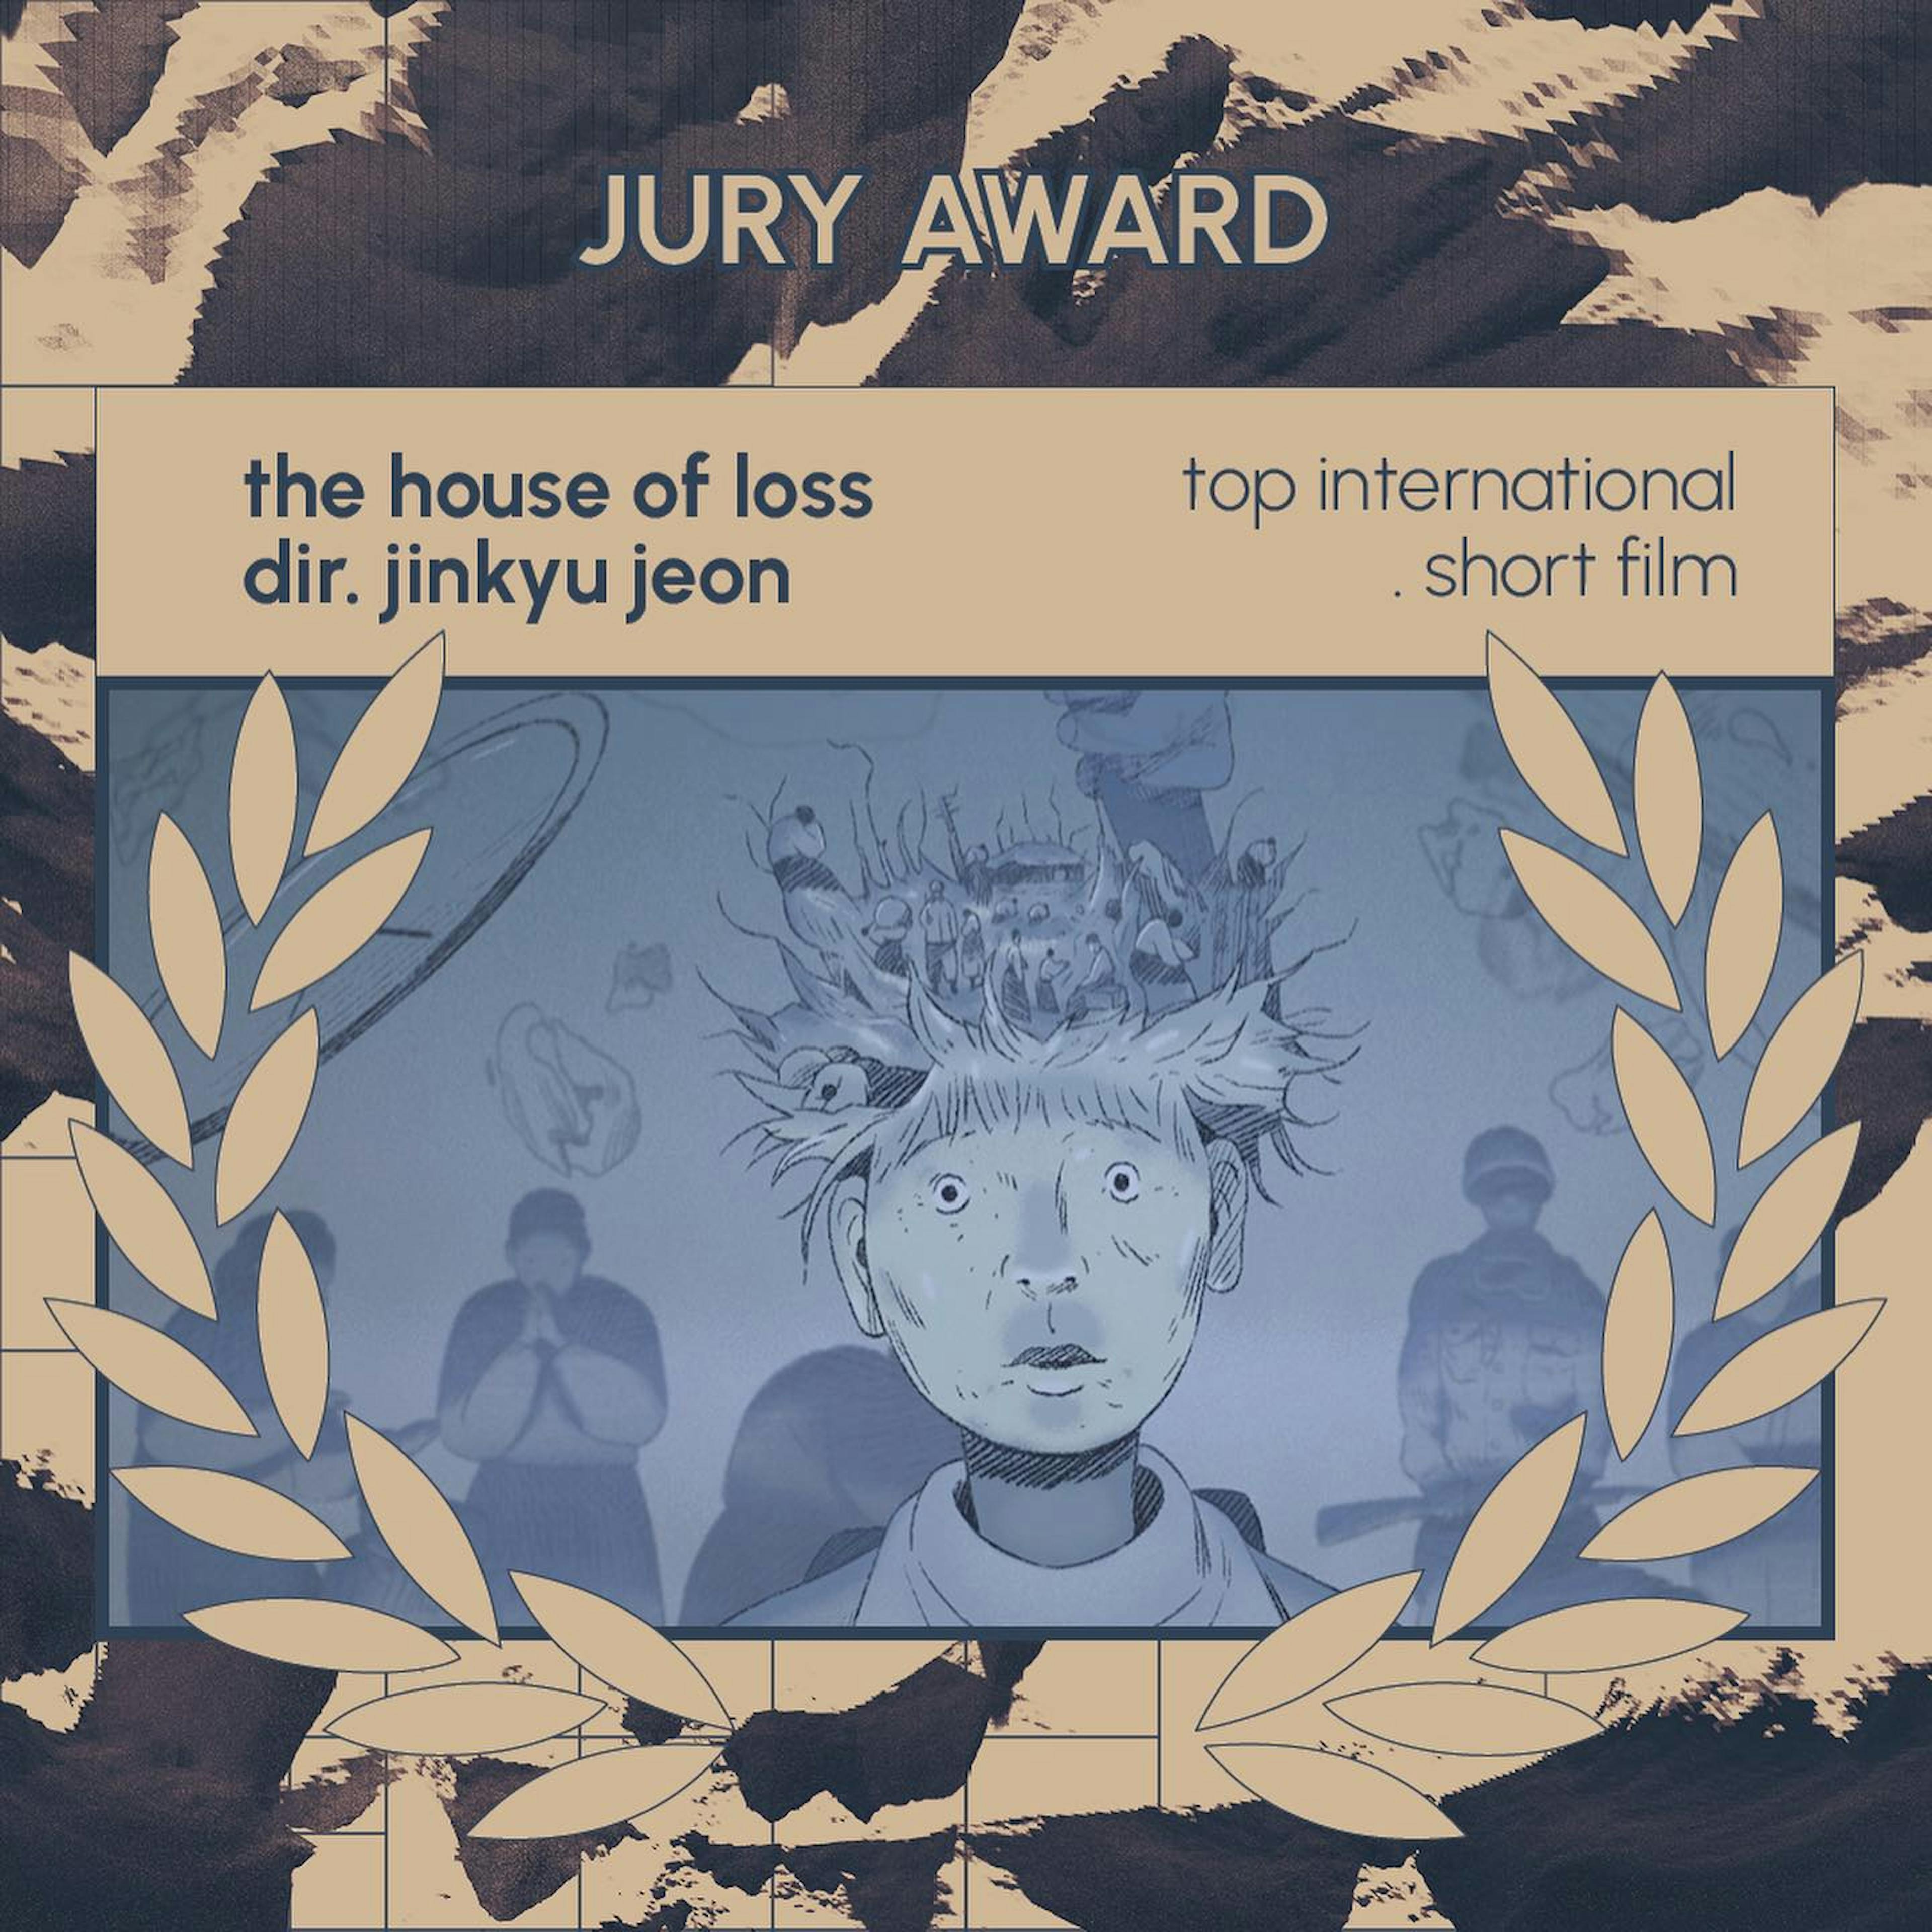 jury award
top international short film
the house of loss dir. jinkyu jeon